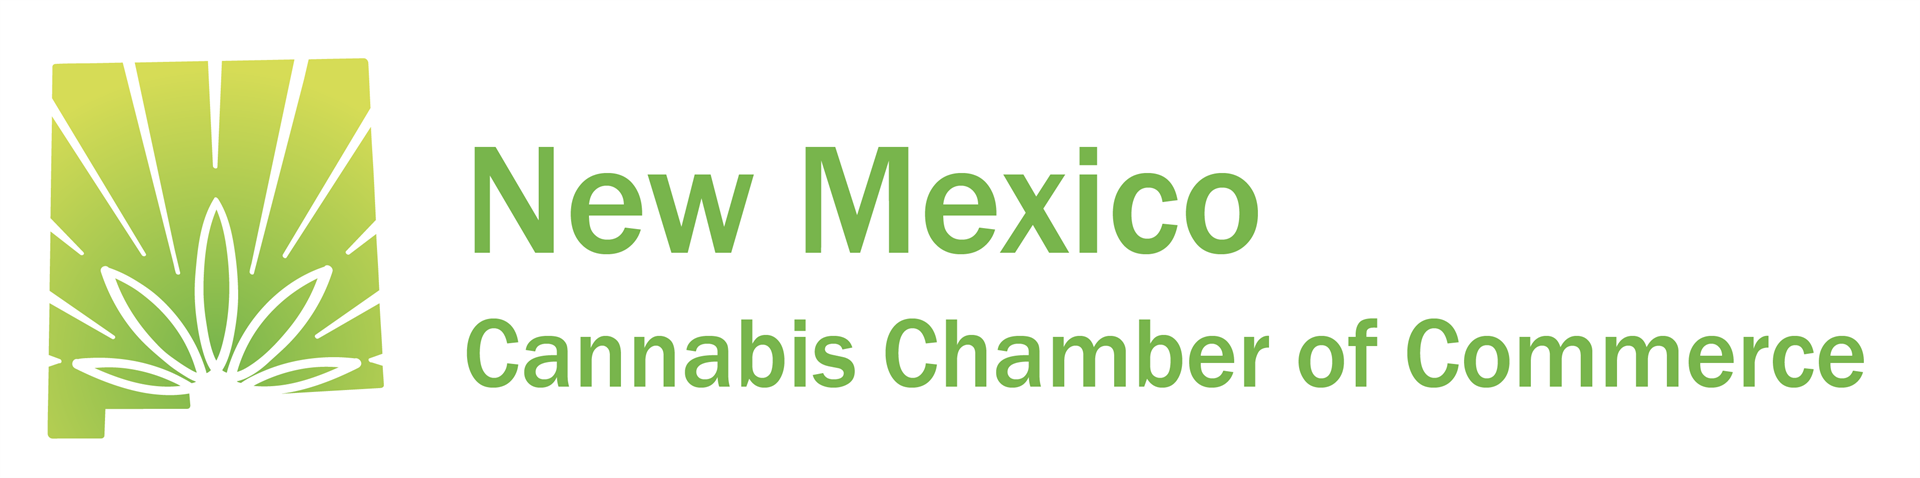 CannaCon New Mexico New Mexico Cannabis Chamber of Commerce